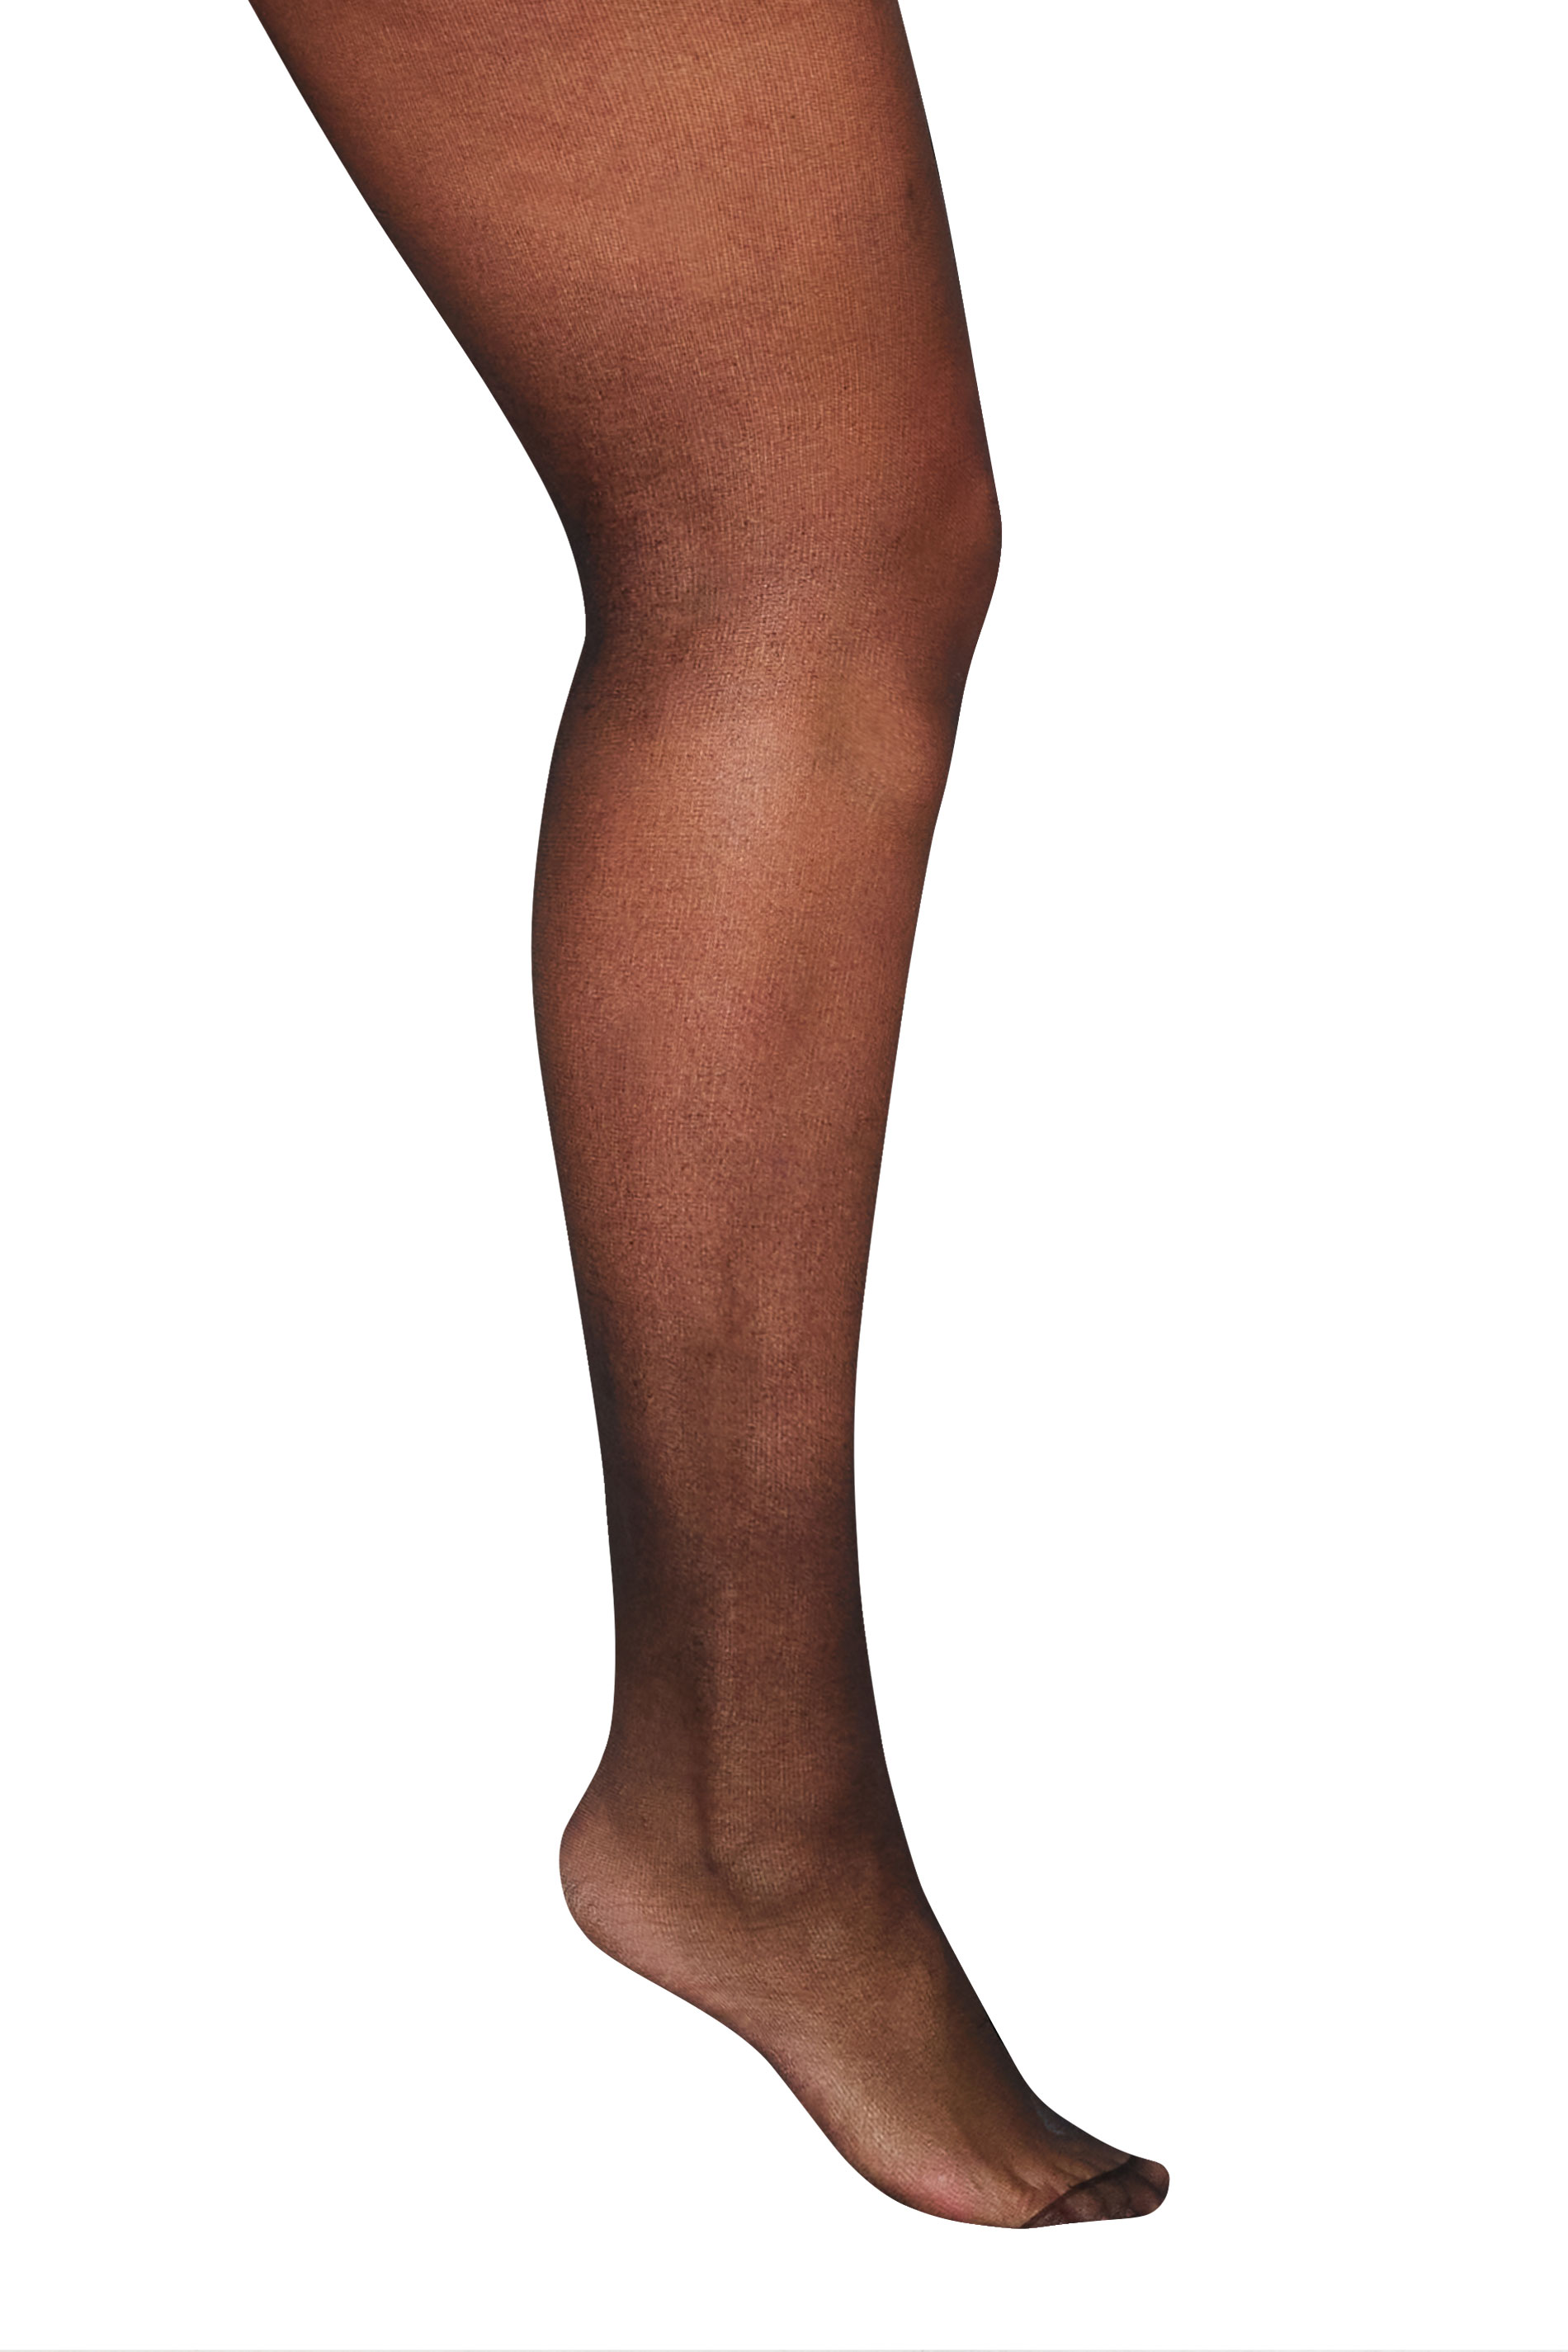 No nonsense Women's Sheer Nudes Control Top Super Women's Sheer Leg  Pantyhose Tan C 